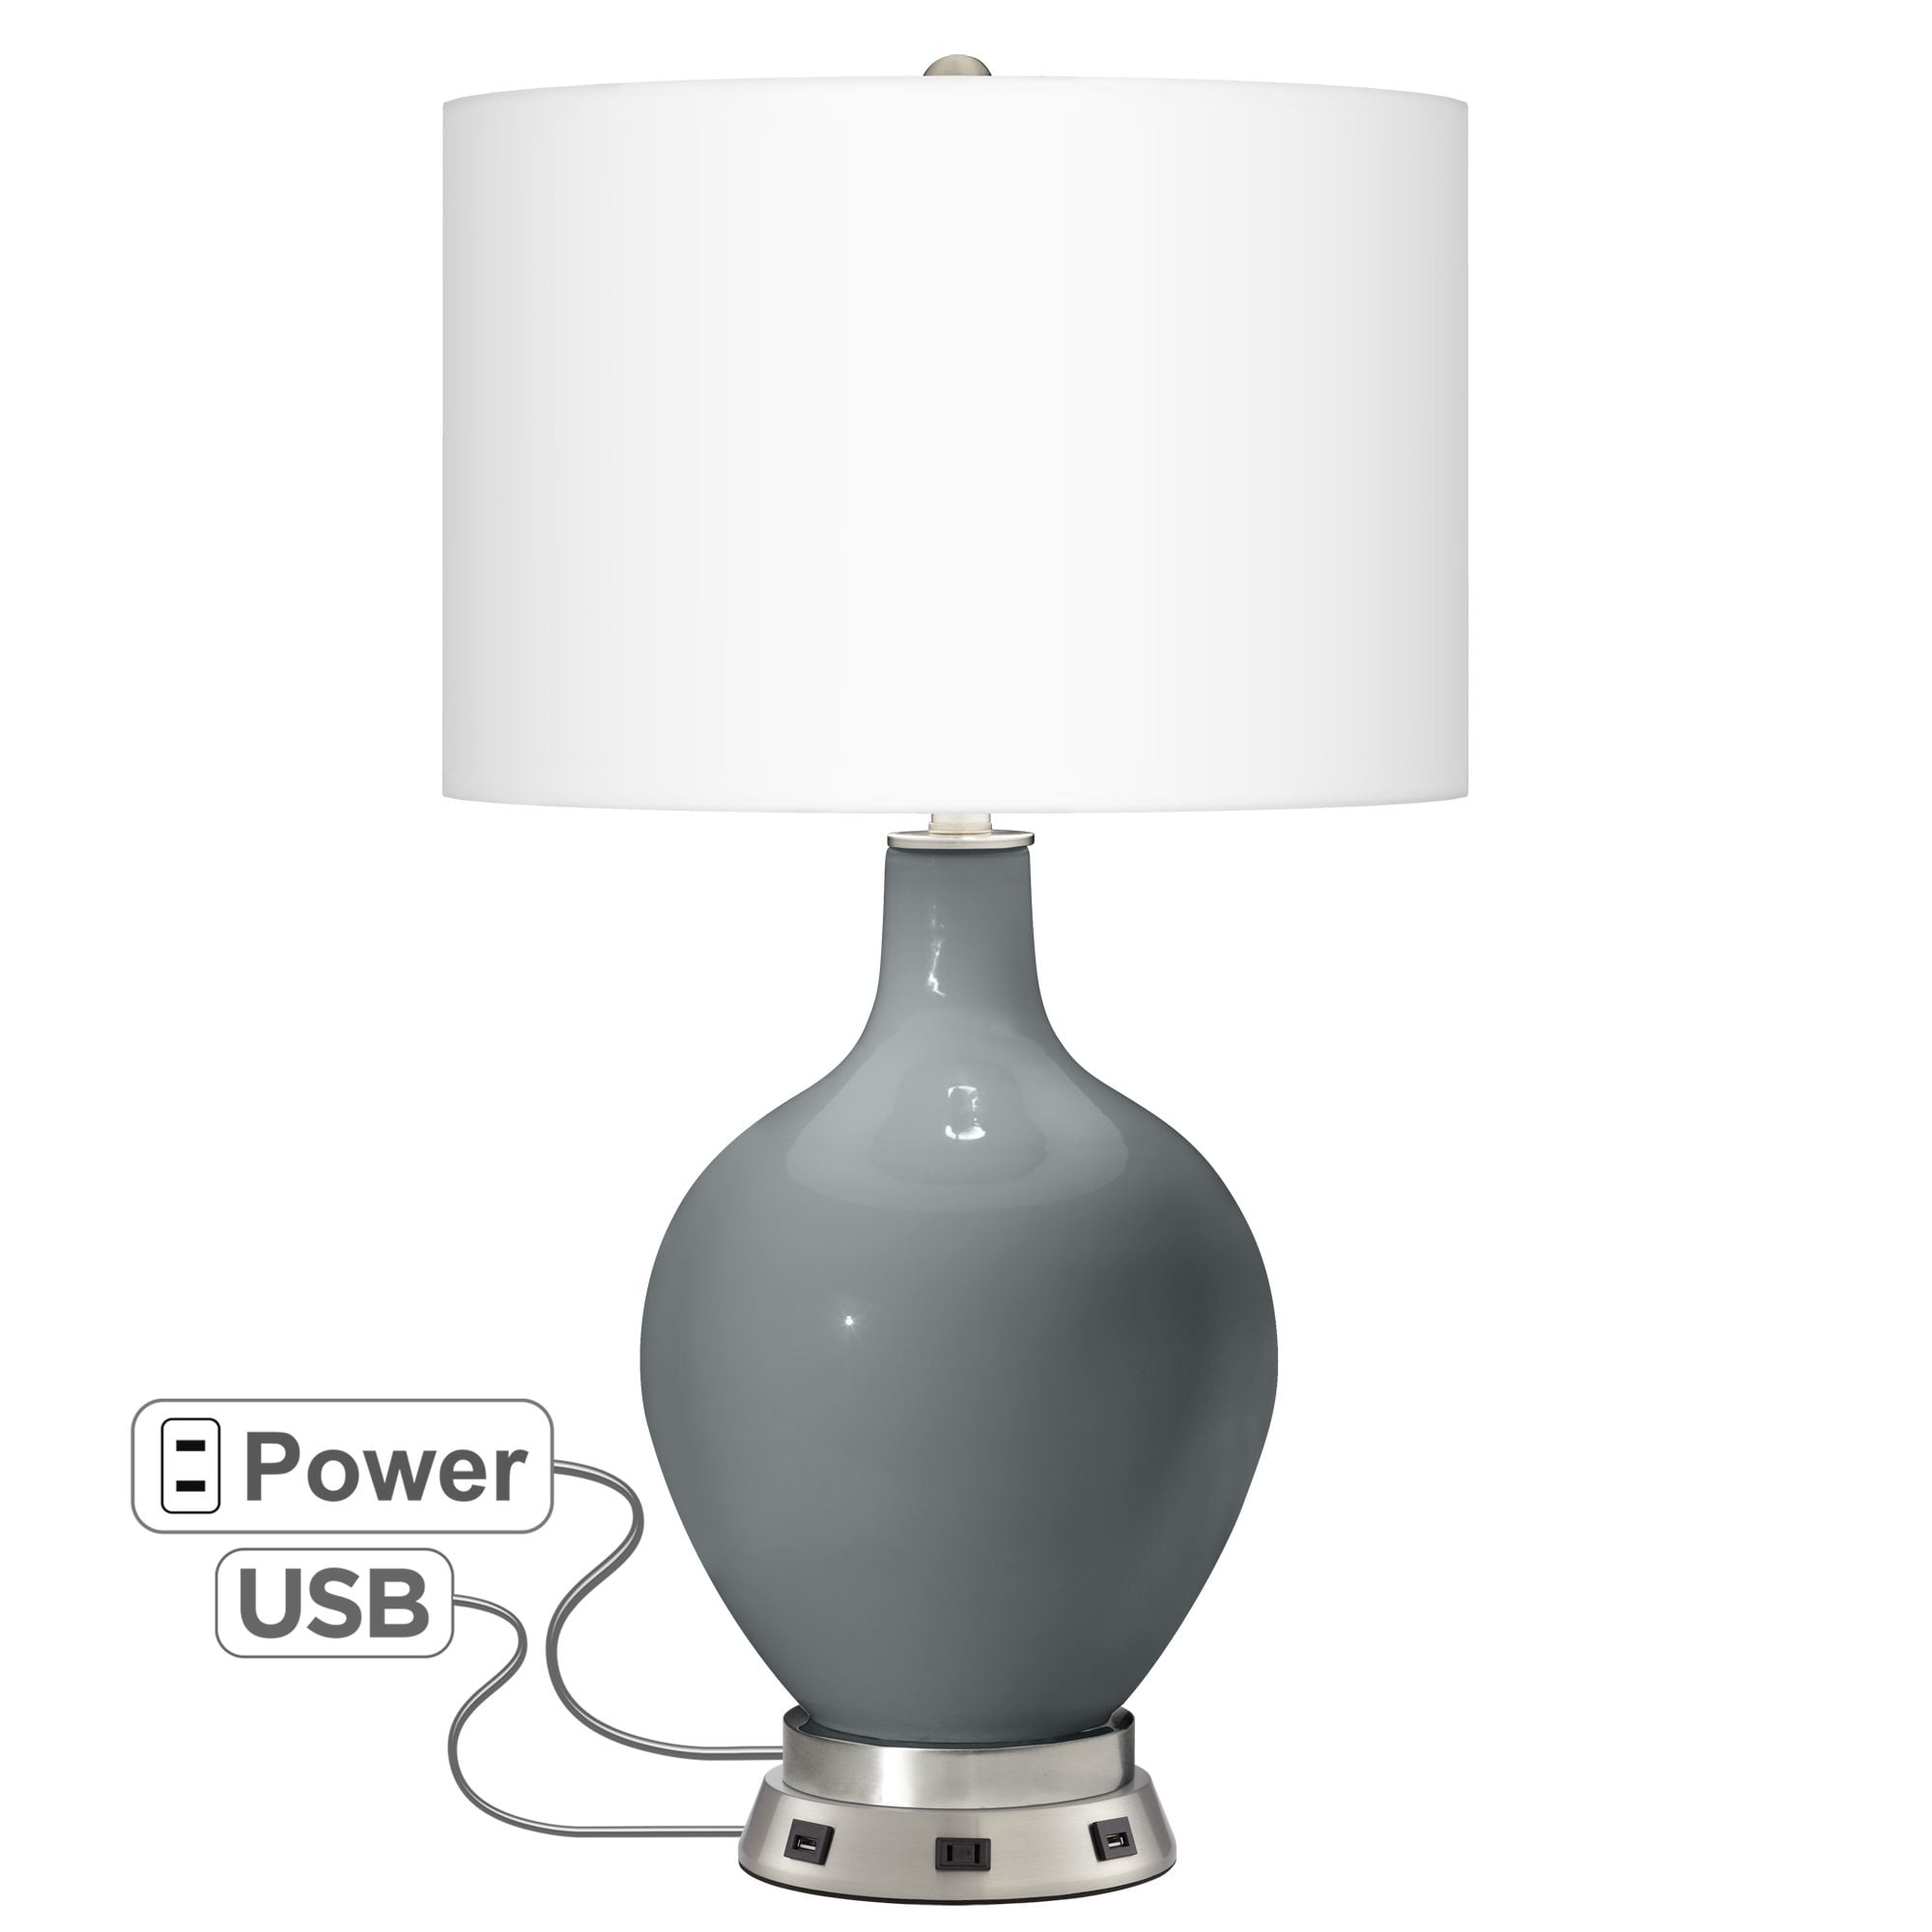 Color + Plus Smoky Blue Ovo Table Lamp with Black Shade - Walmart.com